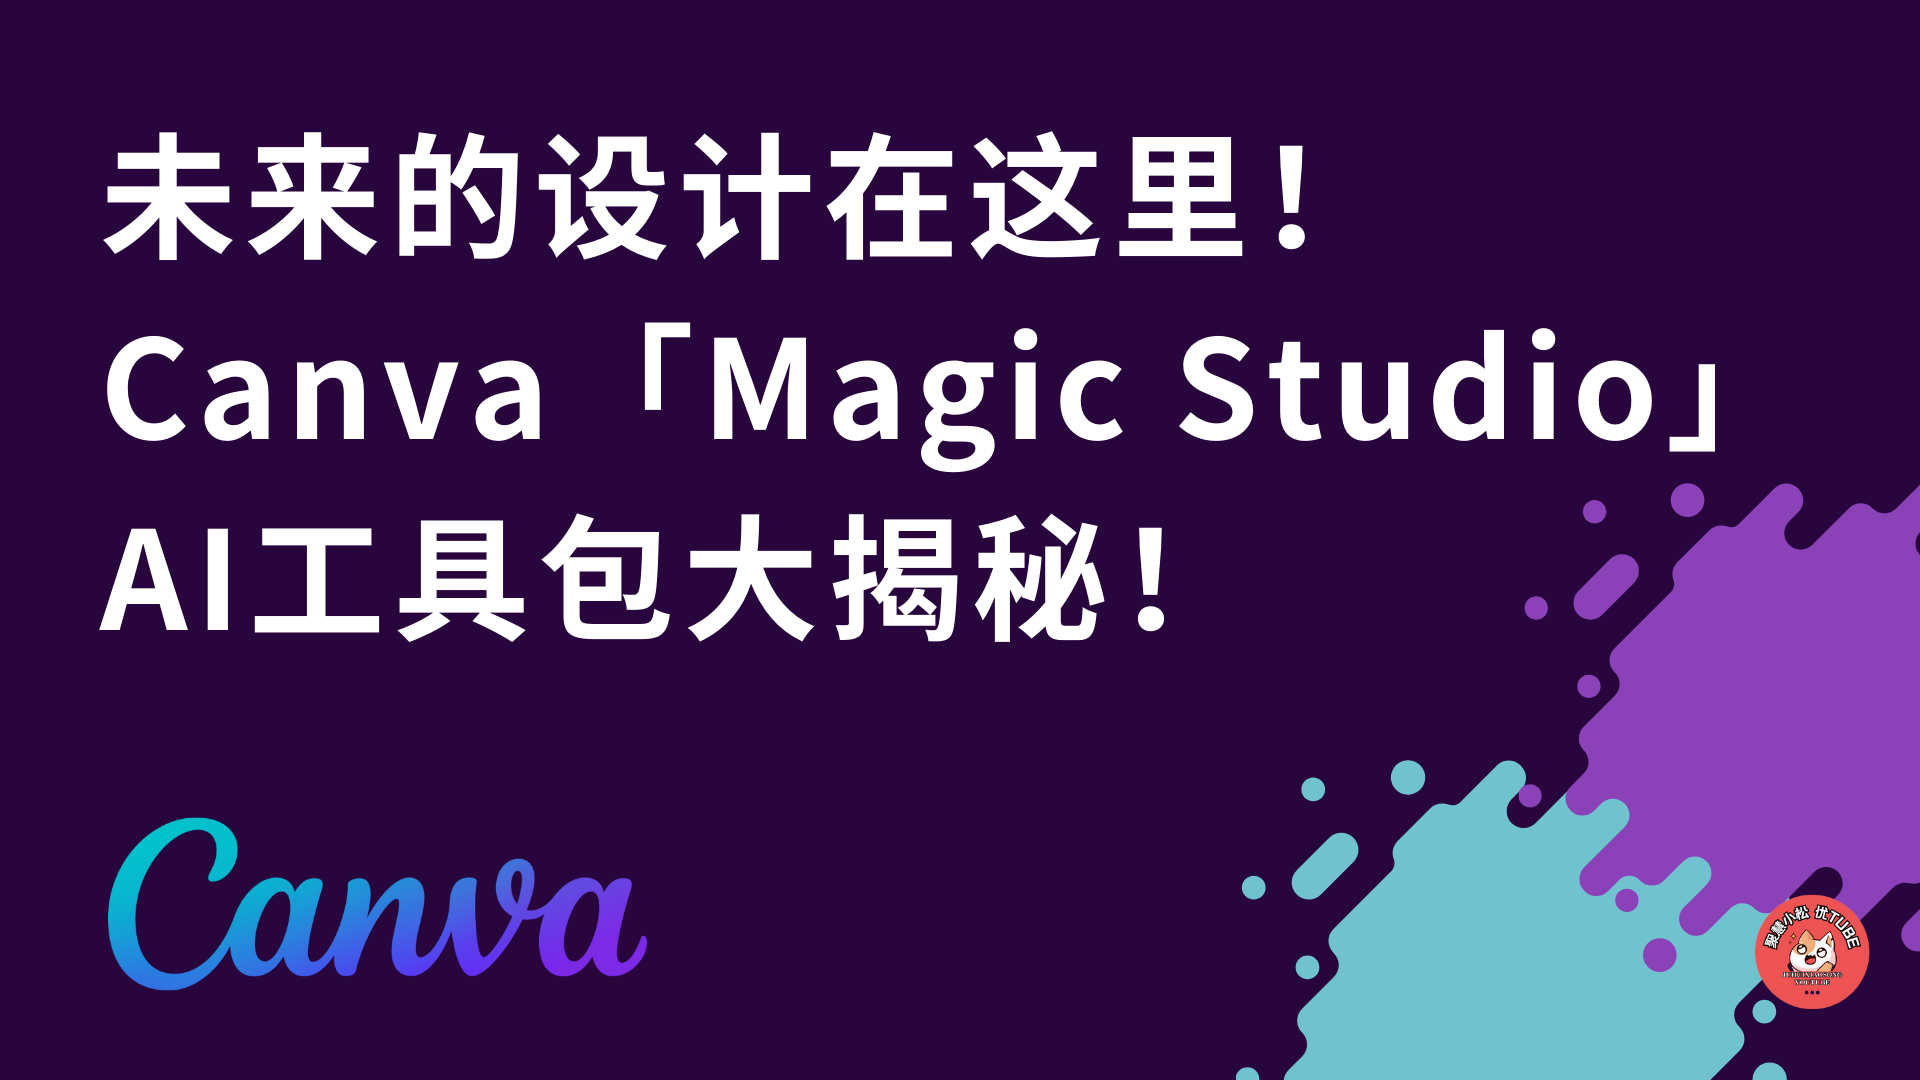 Canva使用教程 - Canva 相关教程 1 - 未来的设计在这里！Canva「Magic Studio」AI工具包大揭秘！ - 特色图片